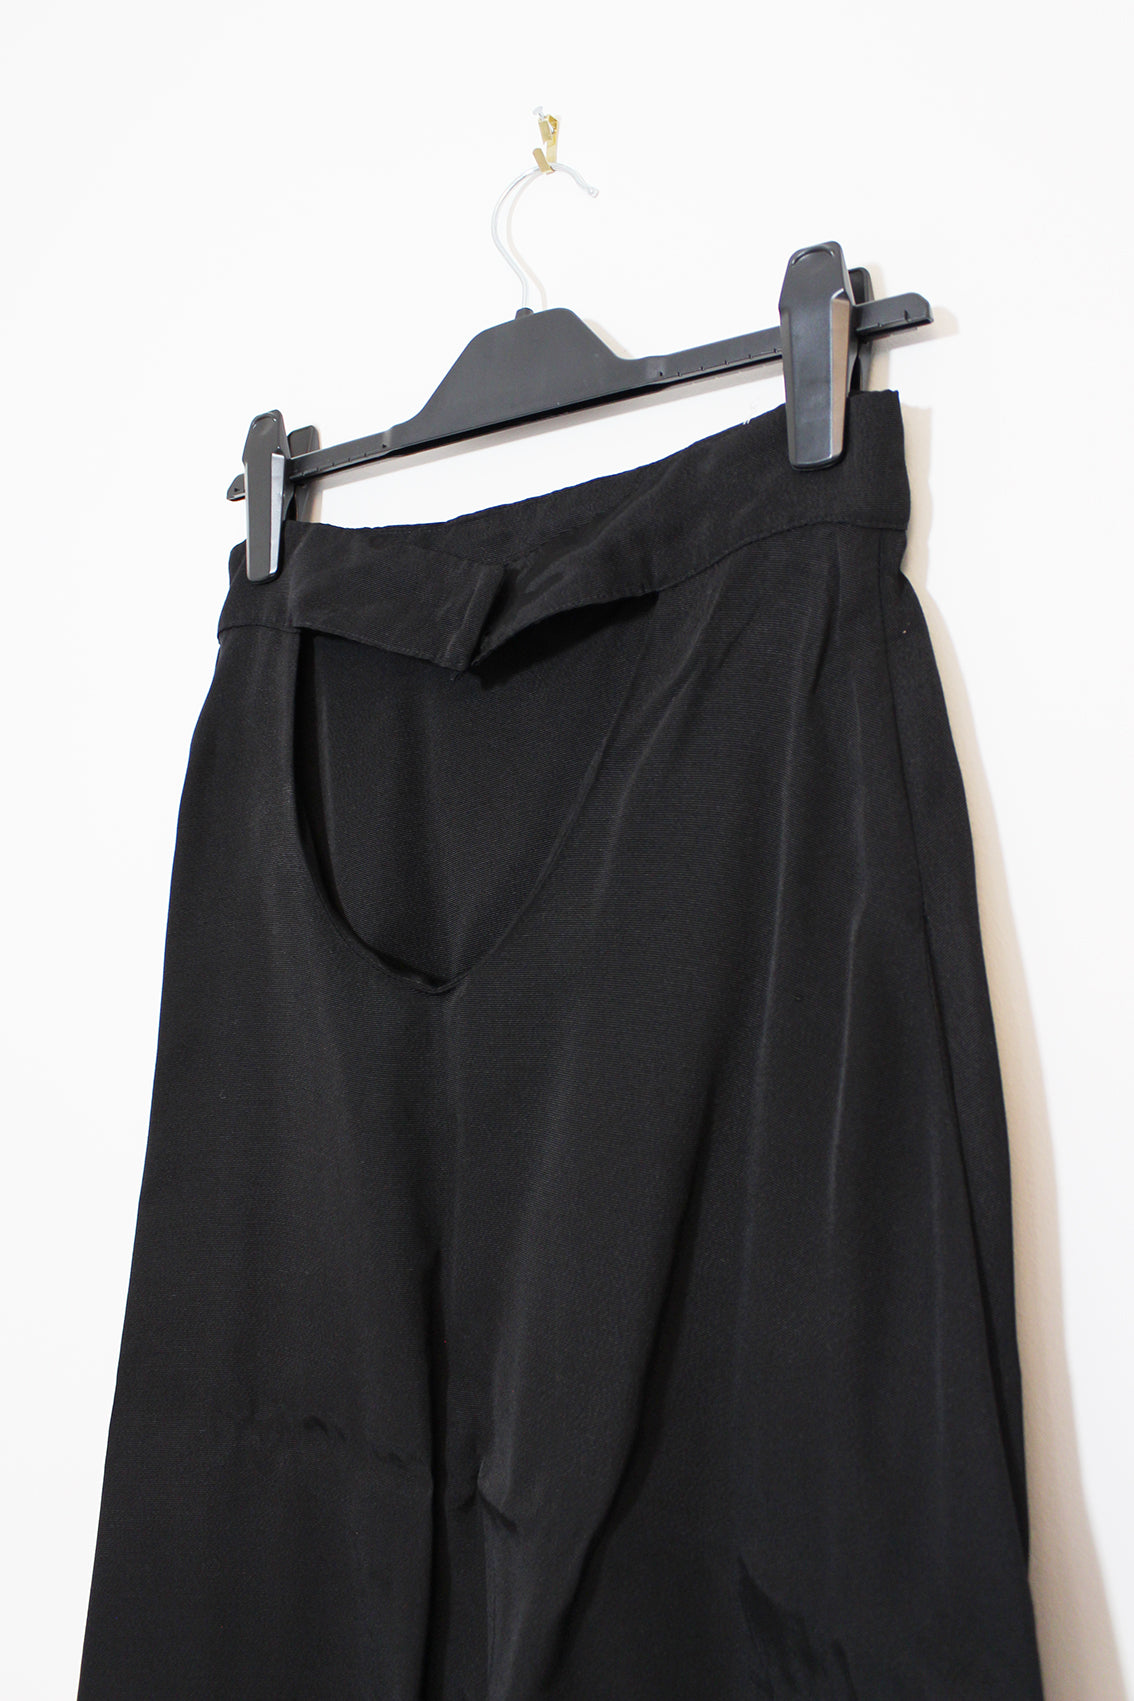 Stratus Skirt - Sample